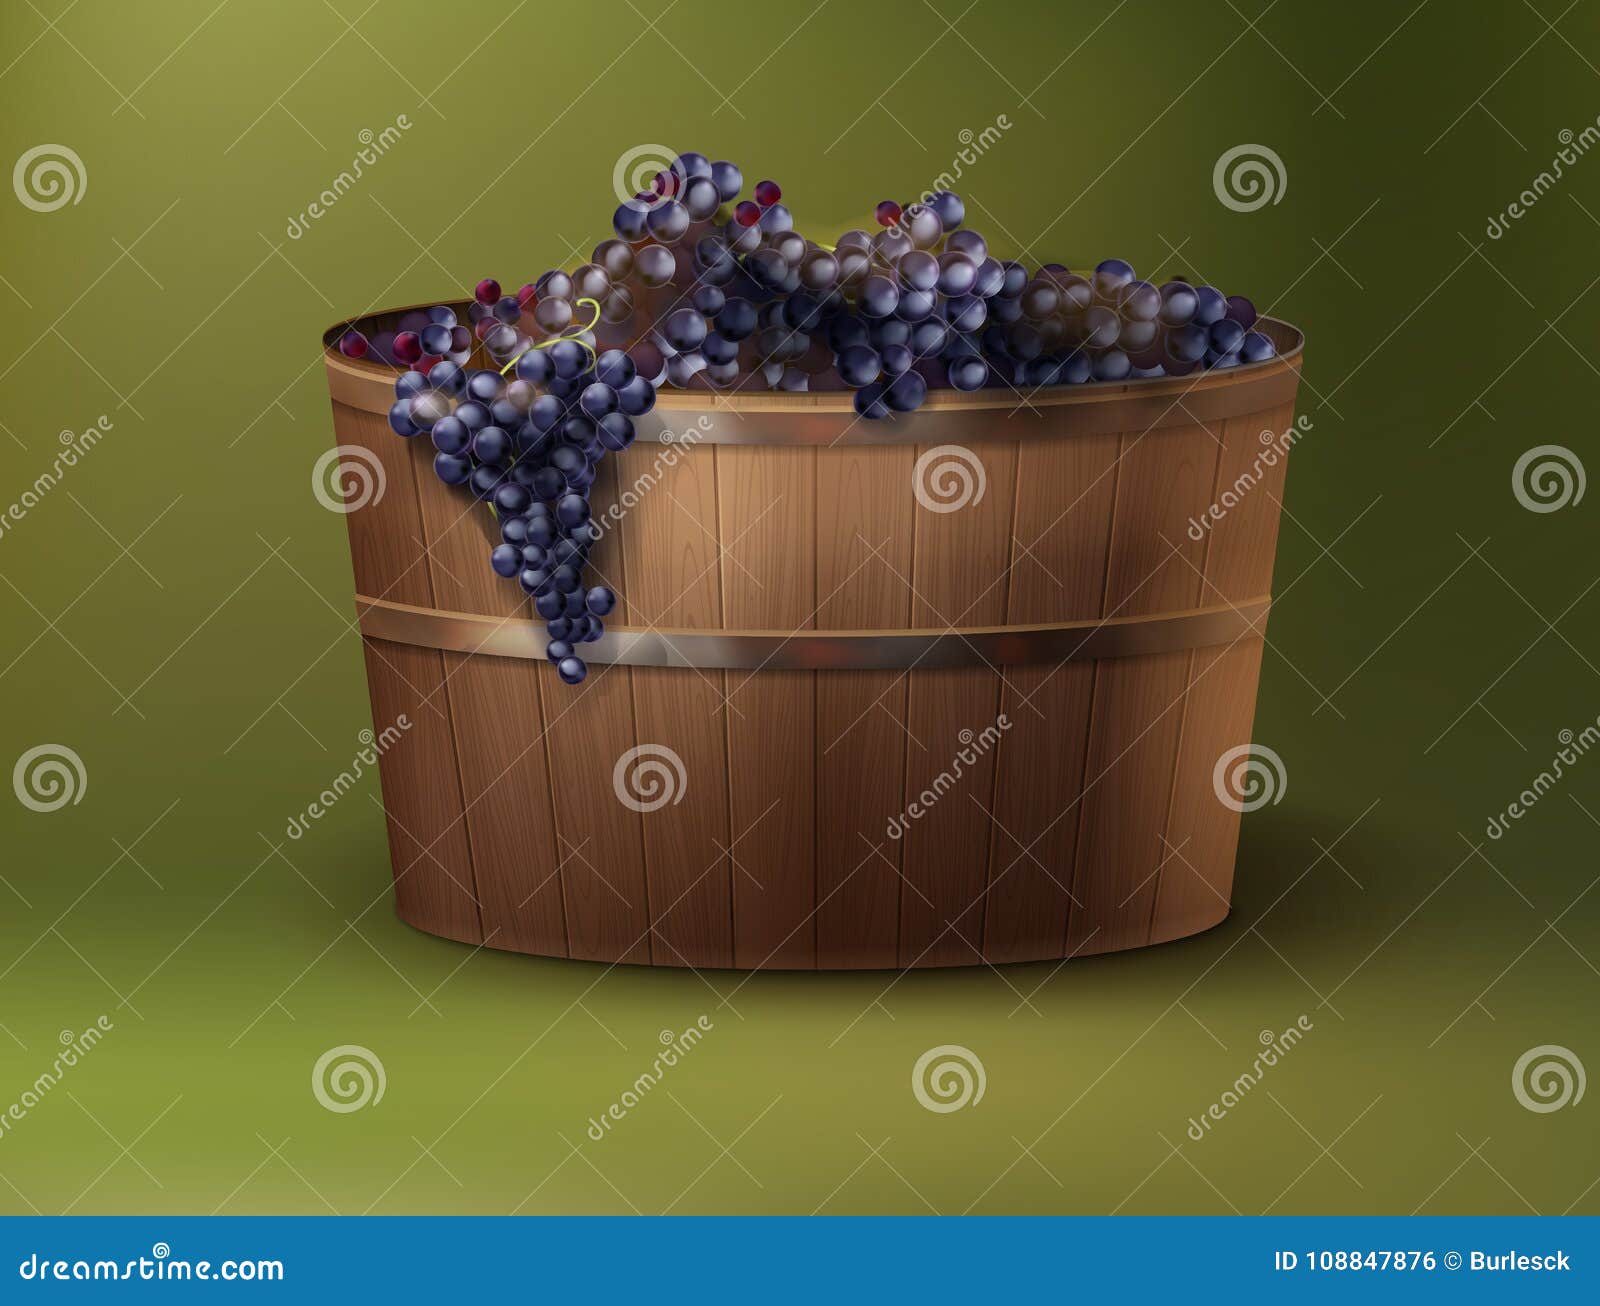 vat of grapes